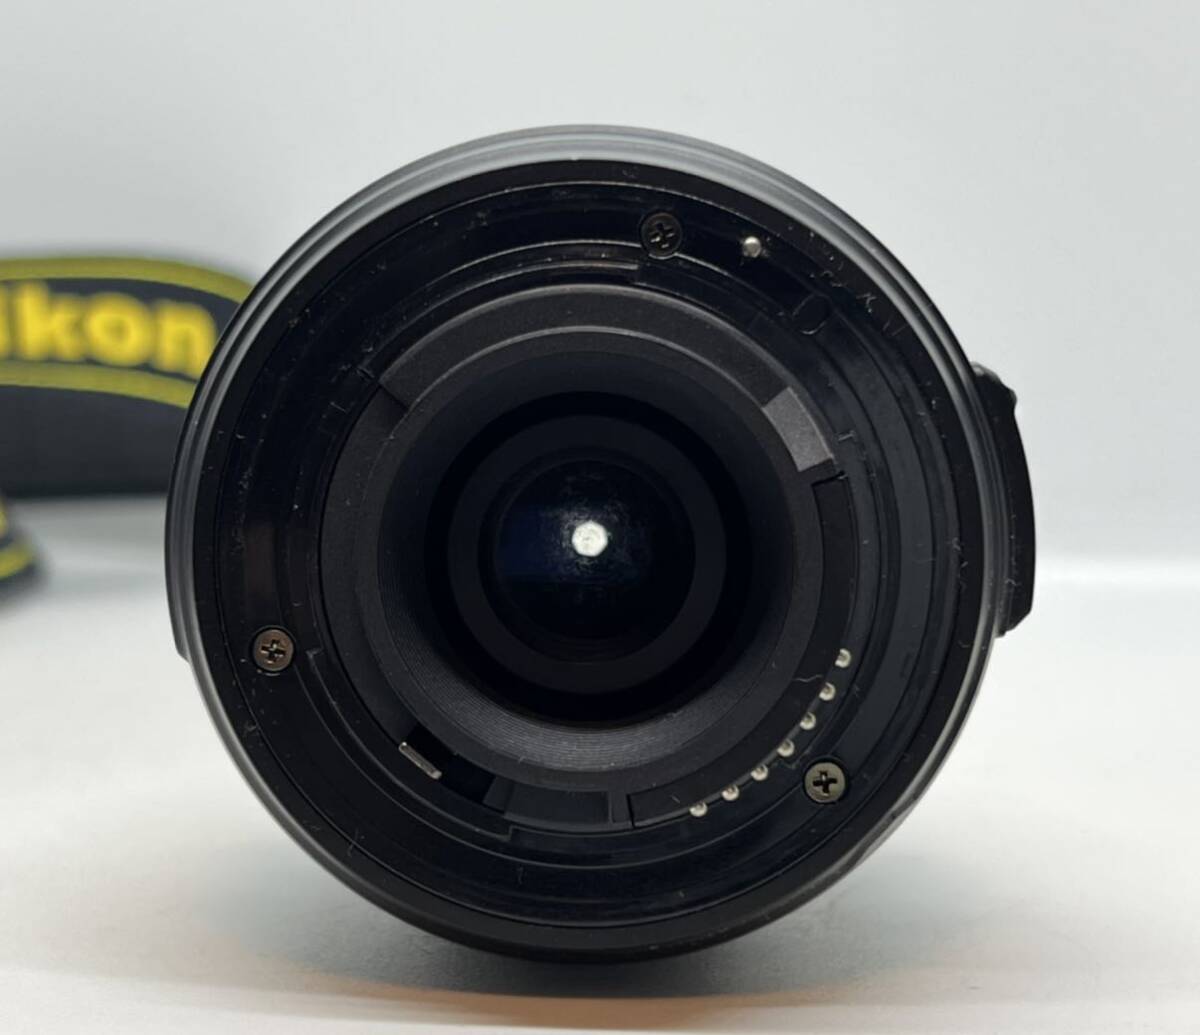 Nikon ニコン D40 デジタル一眼 / AF-S DX NIKKOR ED 18-55mm 1:3.5-5.6G II / AF-S DX NIKKOR ED 55-200mm 1:4-5.6G 【ANN111】_画像8